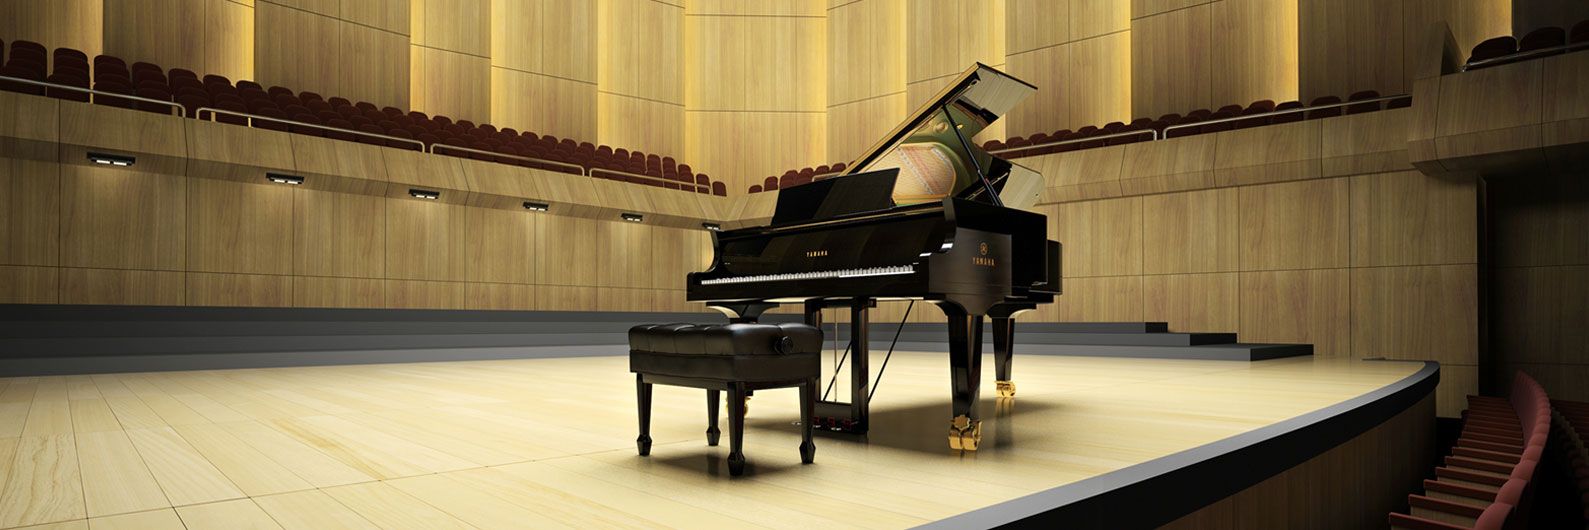 Yamaha CLP 775 Piano - Classic Pianos Seattle & Bellevue Washington